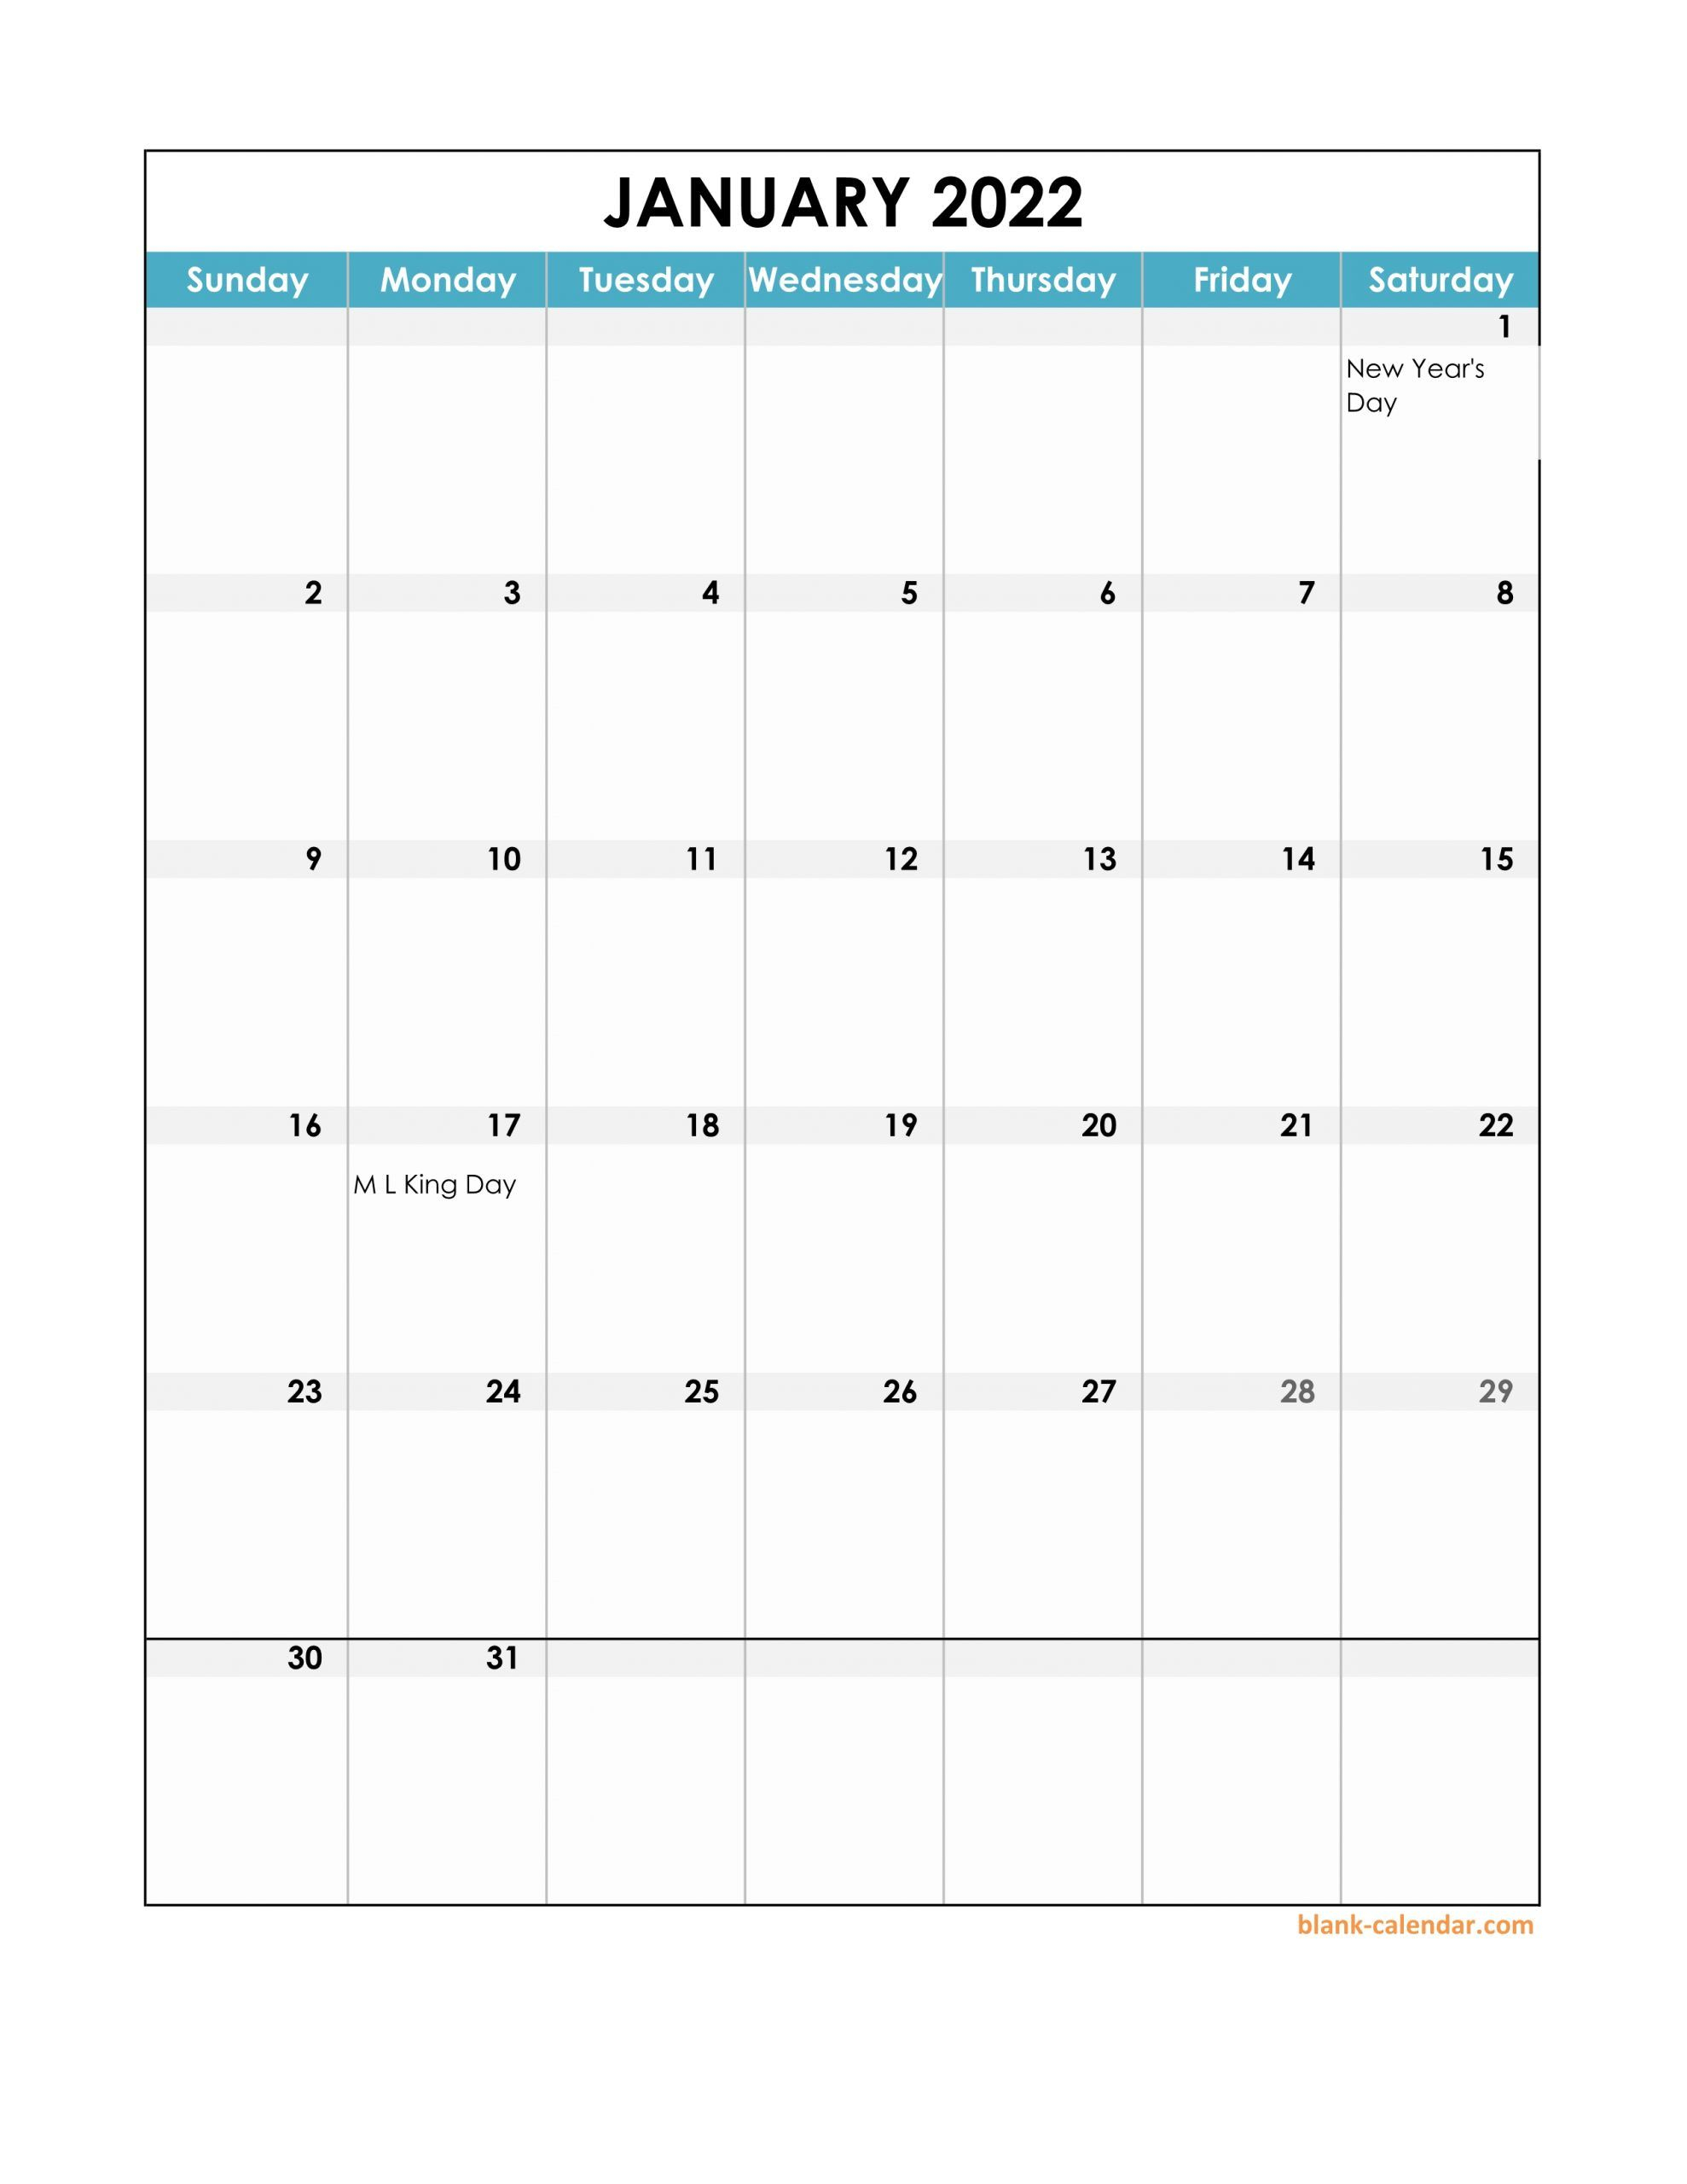 February 2022 Jewish Calendar